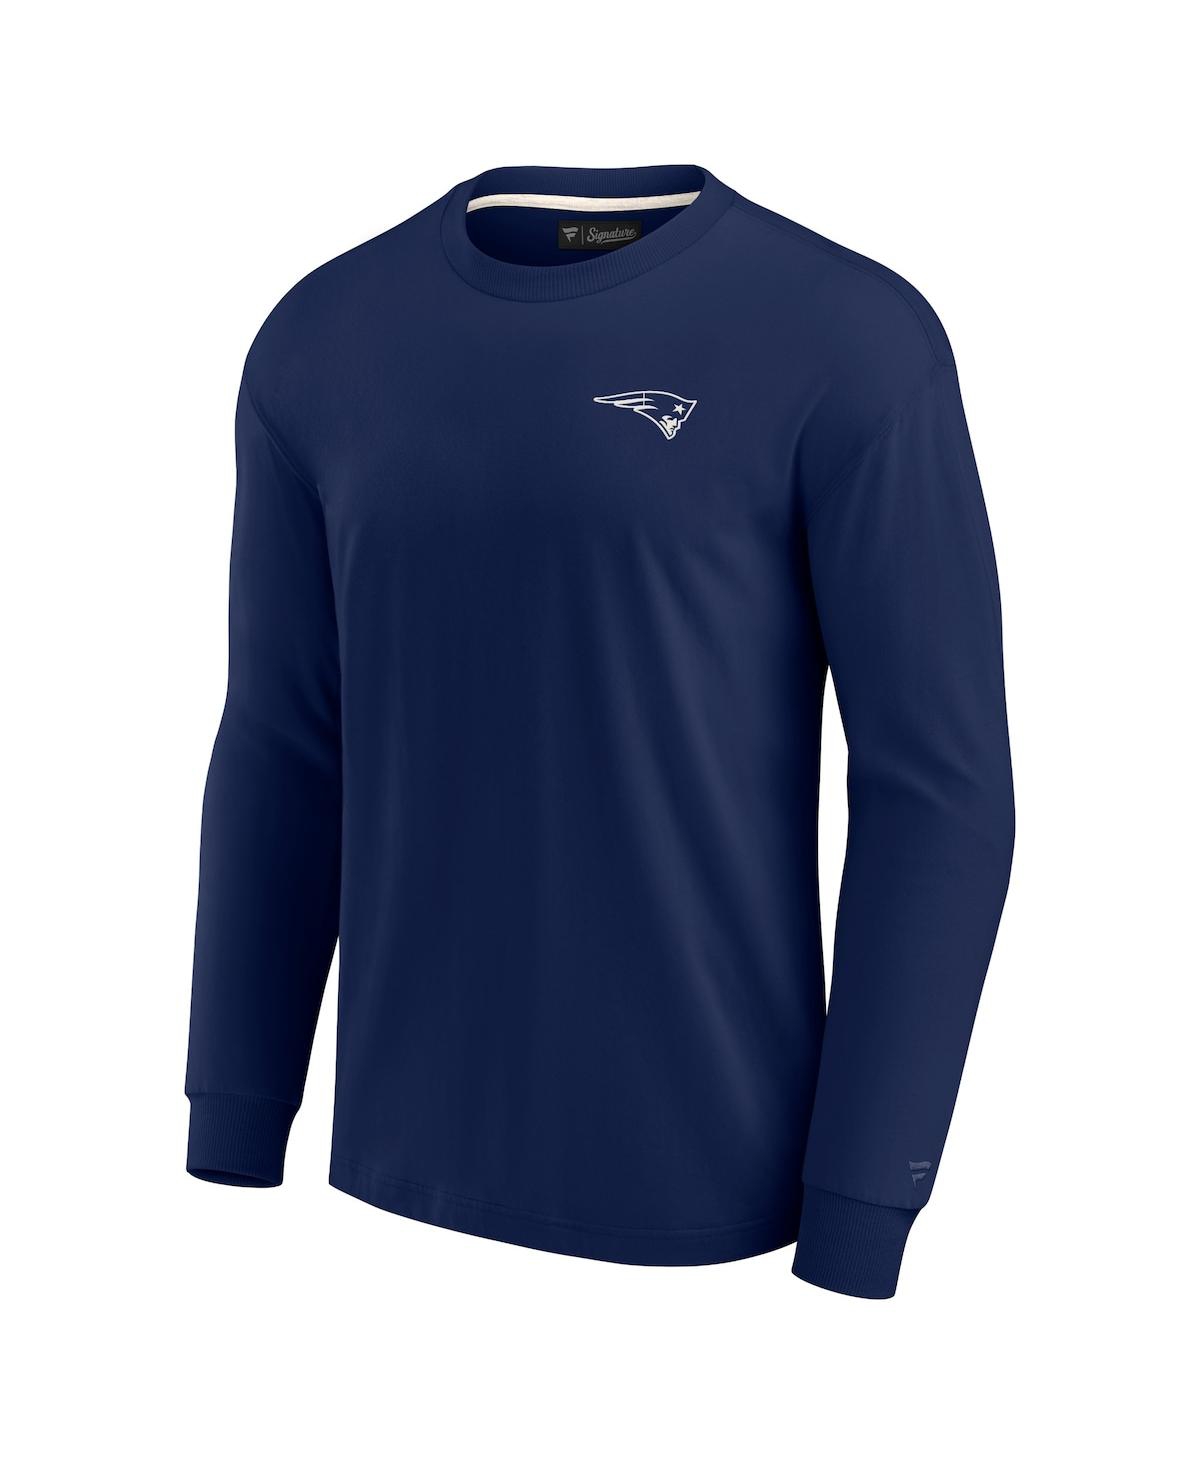 Shop Fanatics Signature Men's And Women's  Navy New England Patriots Super Soft Long Sleeve T-shirt